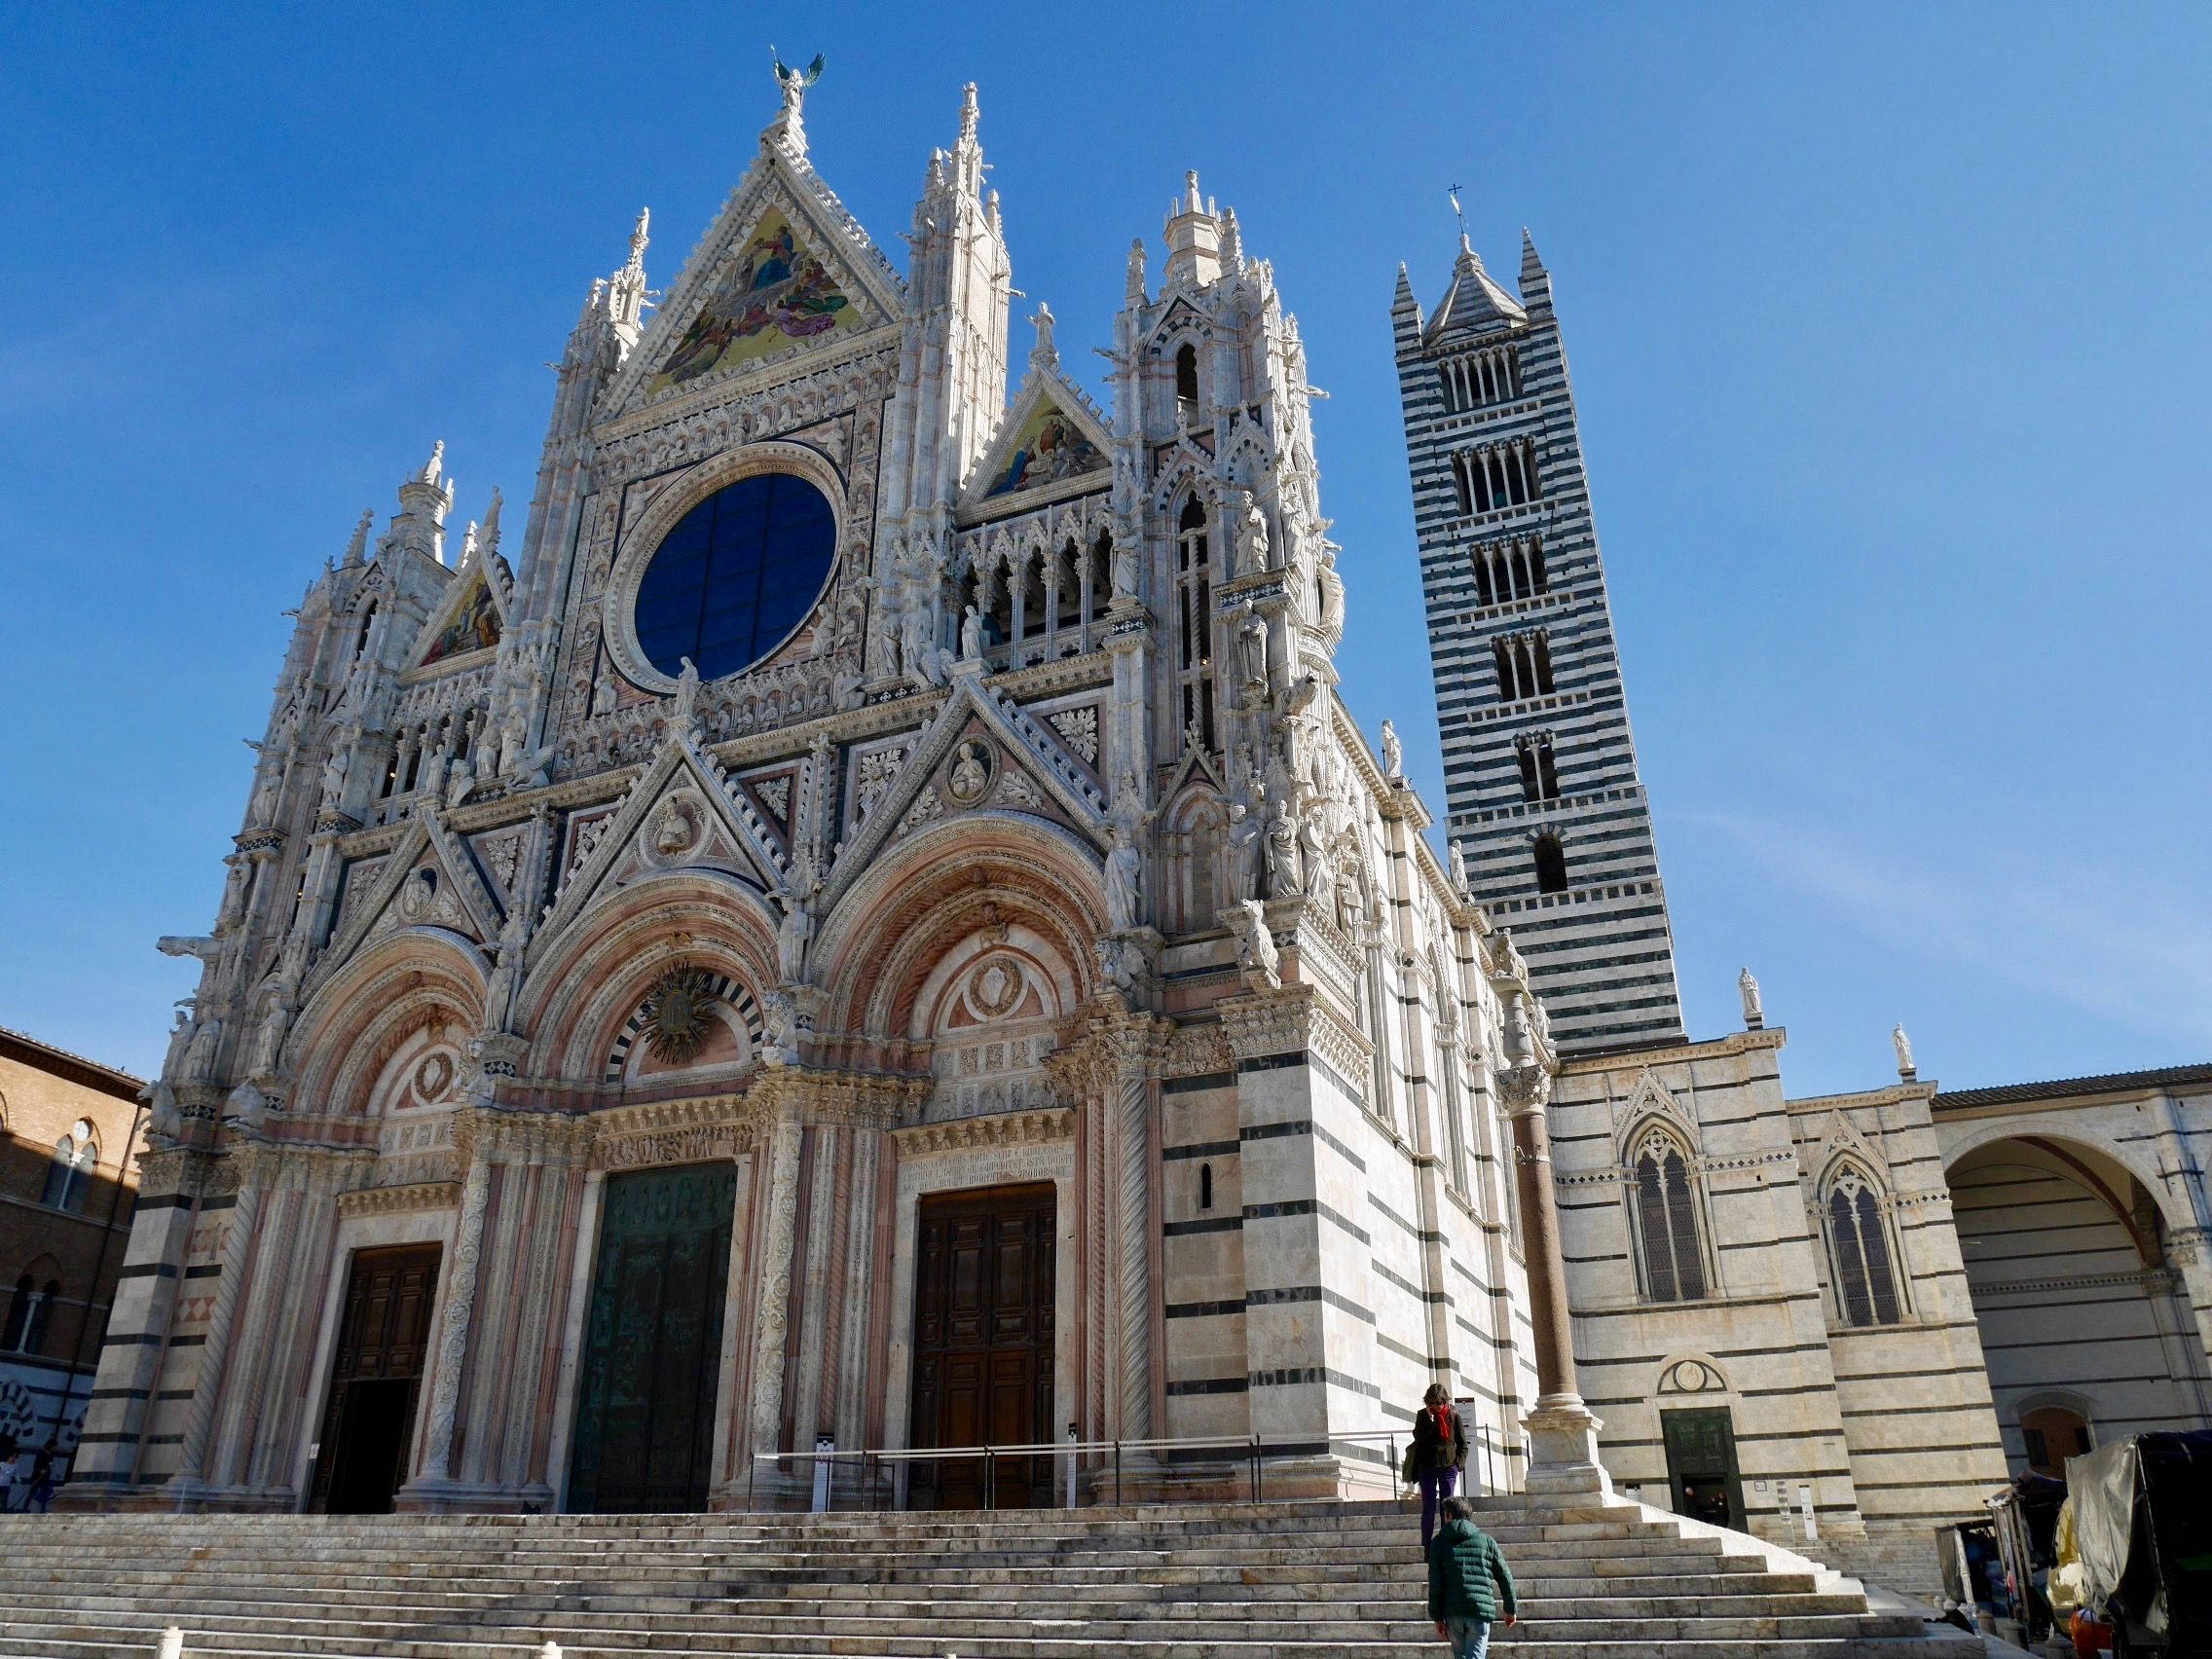 Siena Dom, Italy | Reiseziele Italien H | Pinterest | Siena and Italy